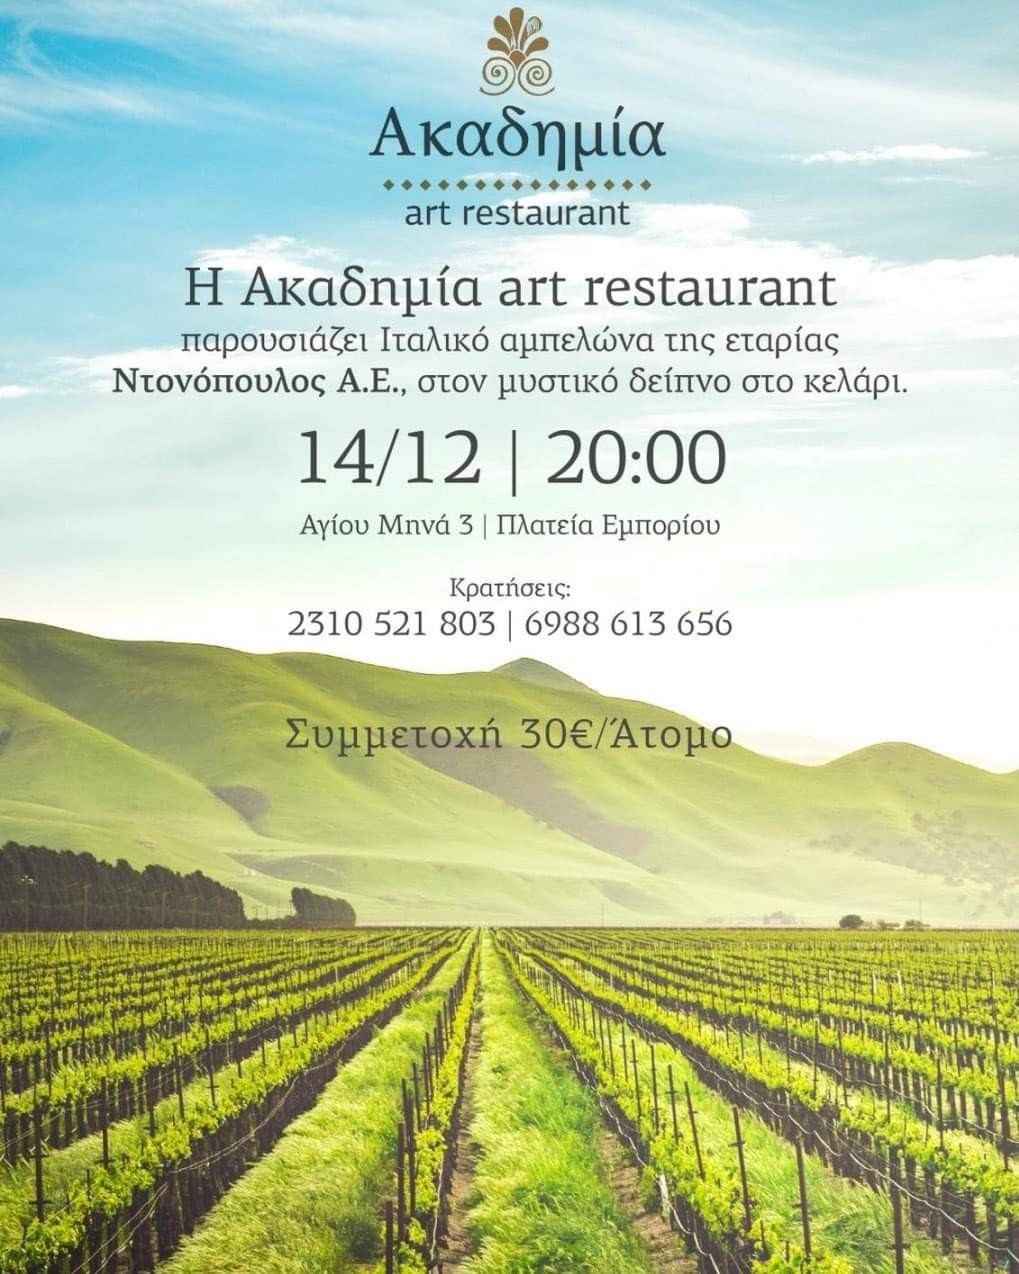 akadimia-art-restaurant2.jpg